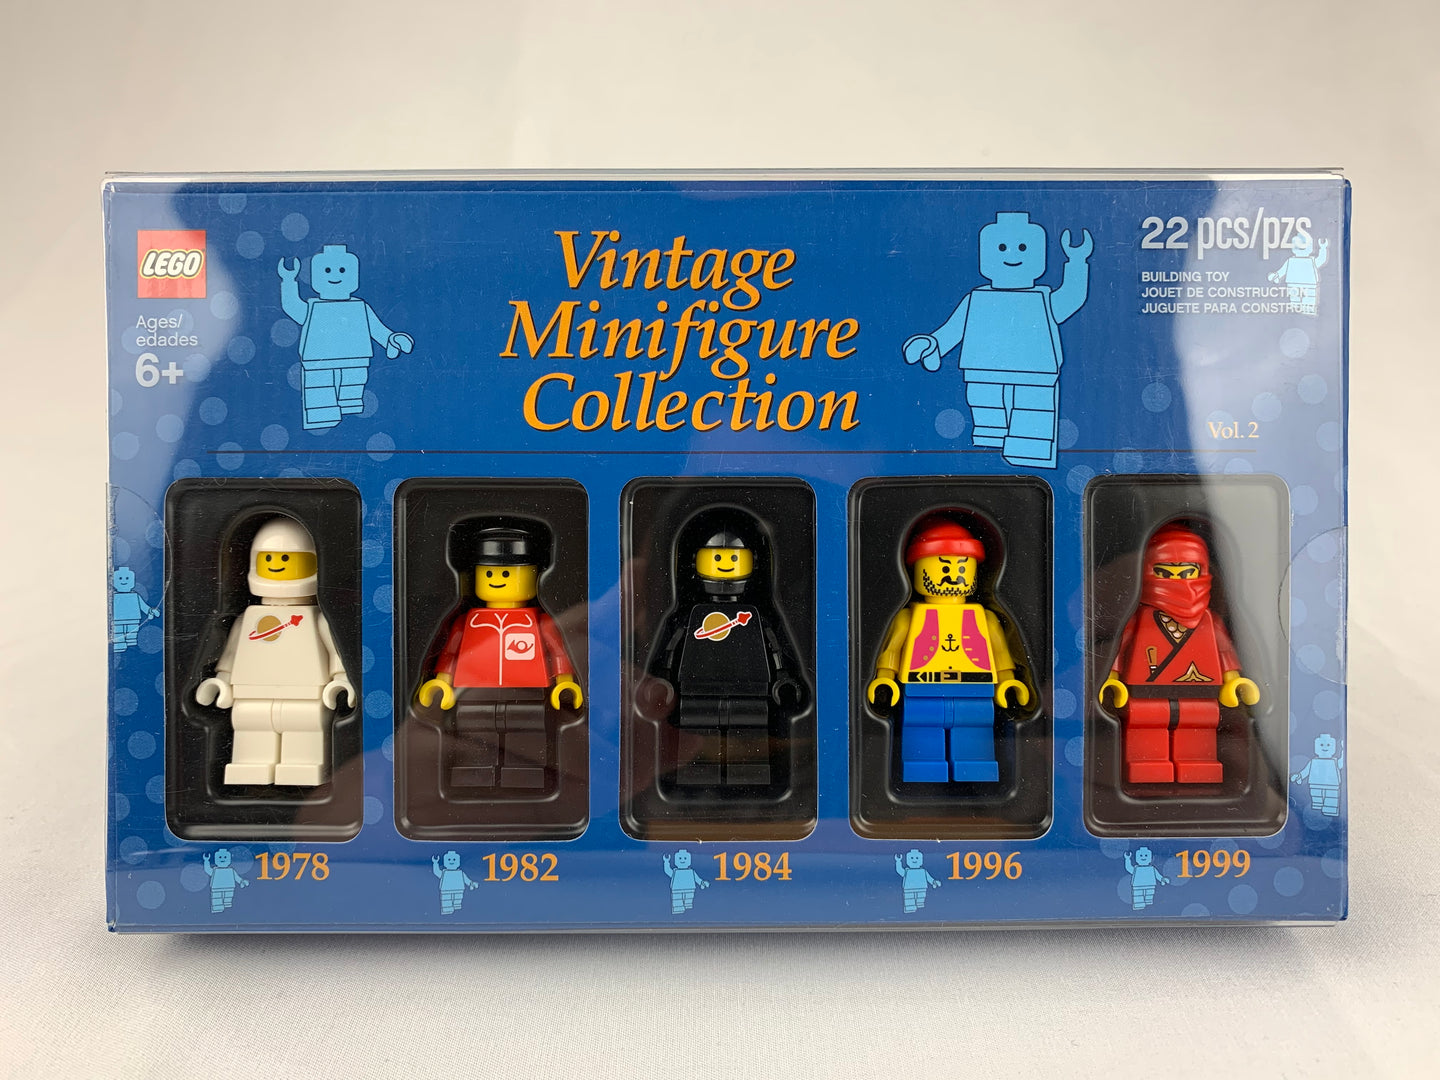 Vintage Minifigure Collection Vol.2 2009 Edition